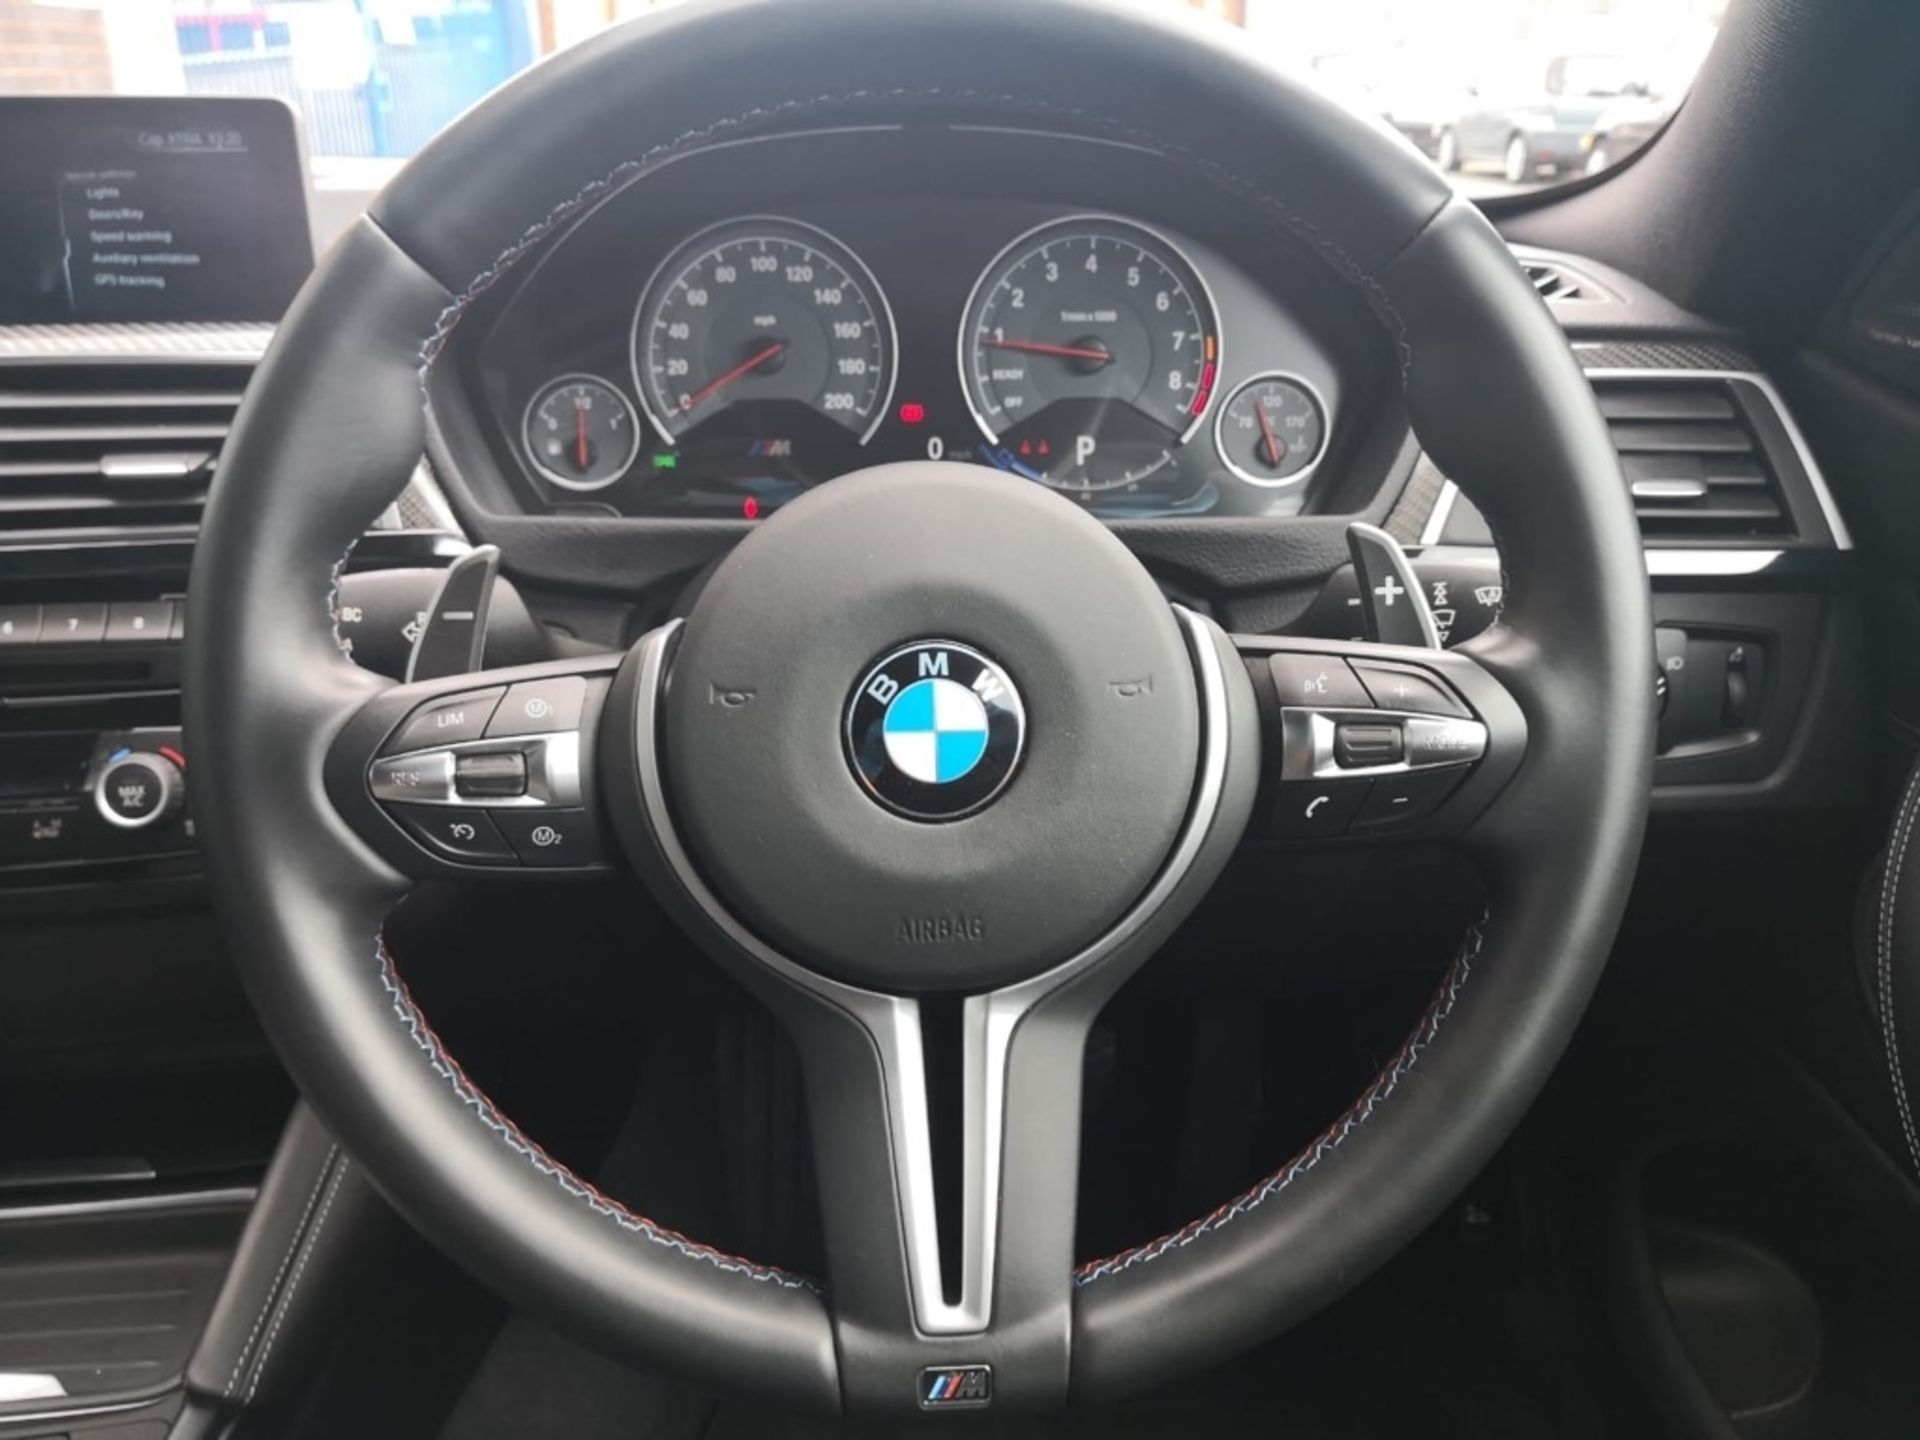 BMW M4 3.0 M DCT 2Dr – Petrol- WhiteReg: LX66 JXG – 2016Mileage: 15,000Service History: Full - Image 5 of 7